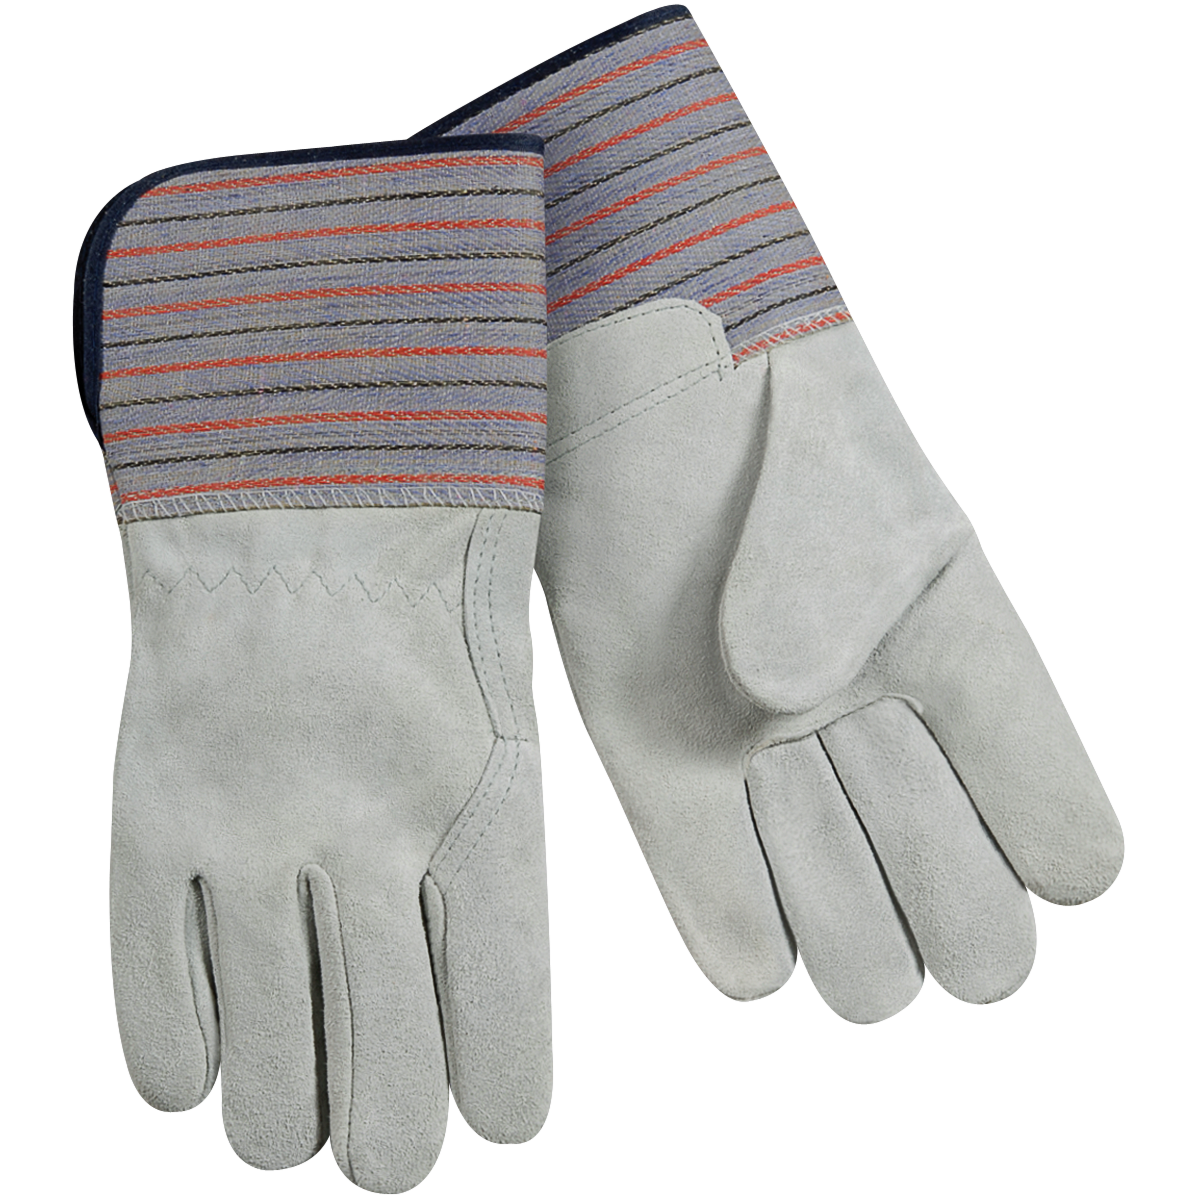 Work Gloves Background PNG Image